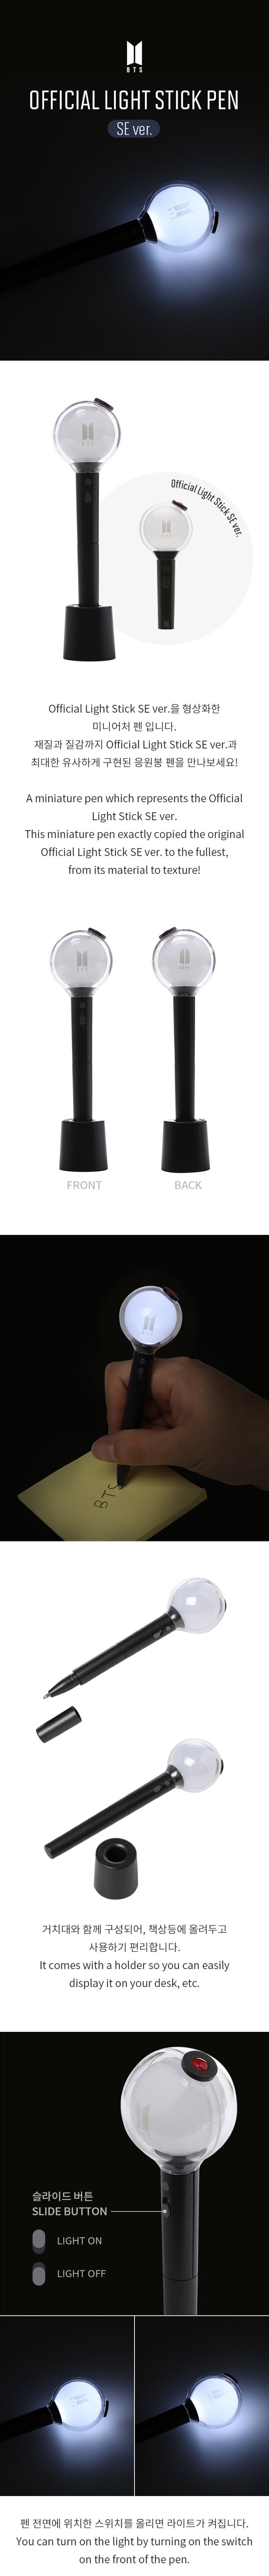 قلم Lightstick الرسمي BTS SE Ver.